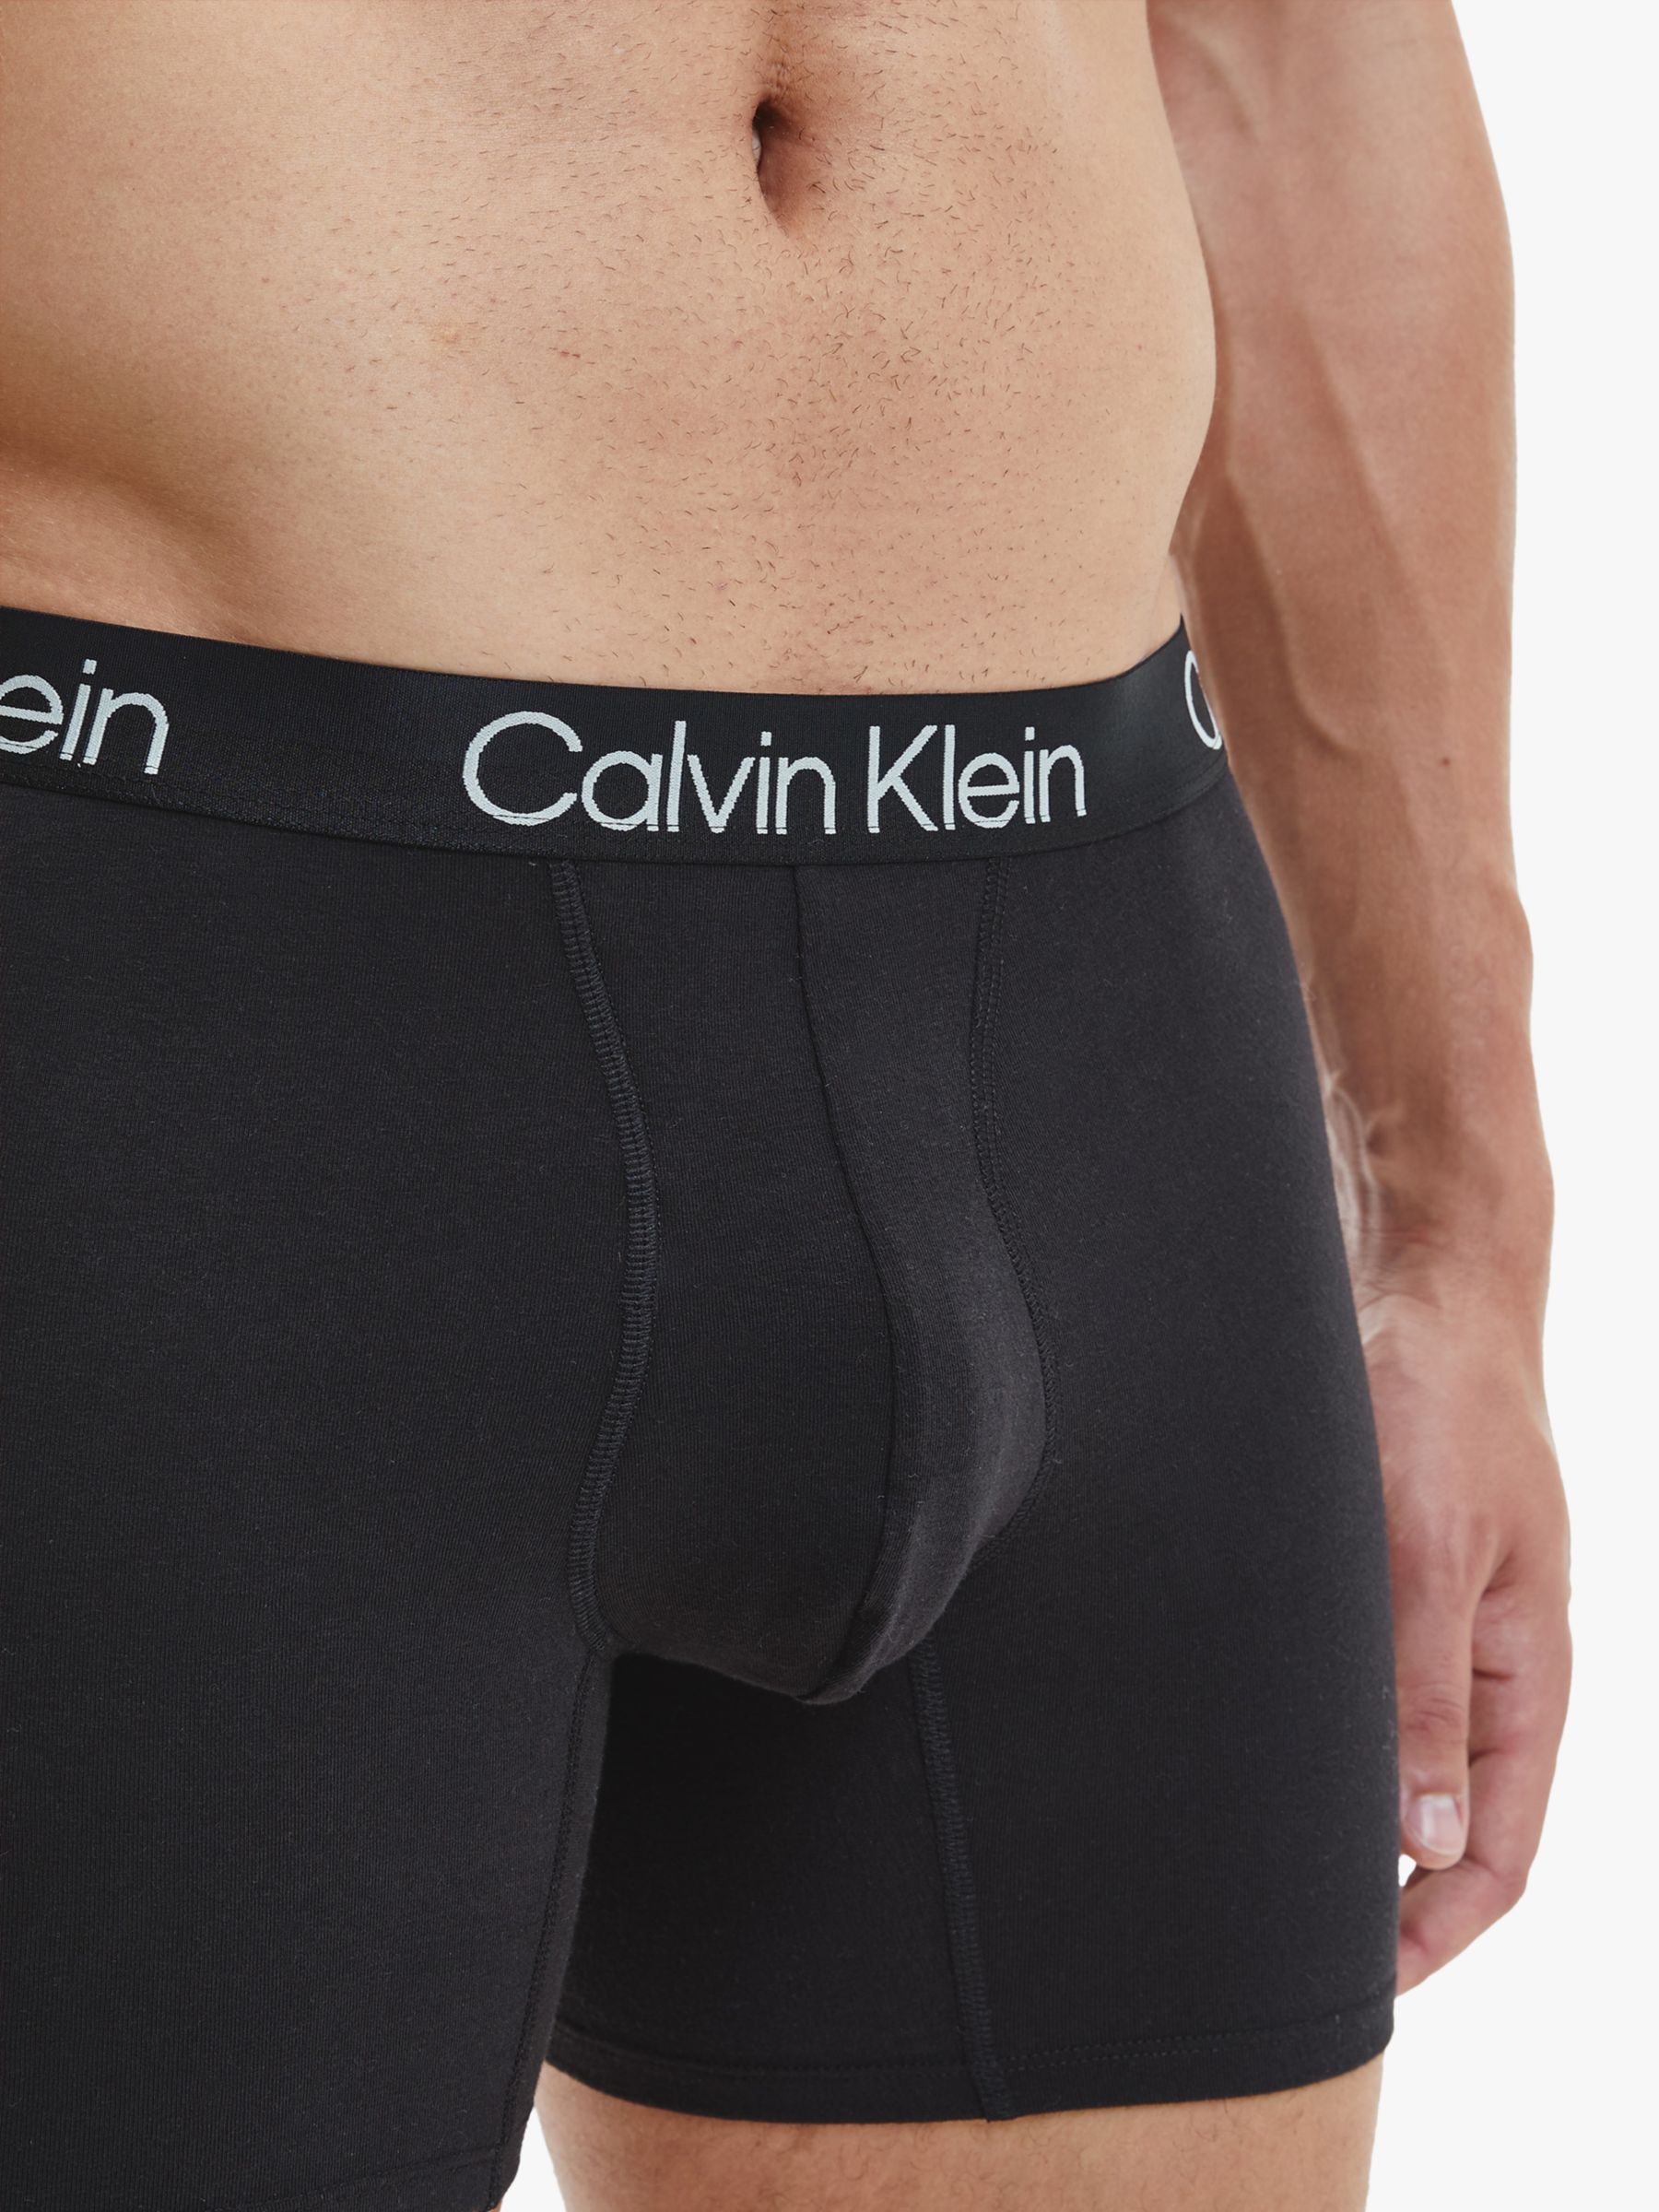 Calvin Klein Cotton Stretch Regular Fit Boxer Briefs, Pack of 3, Black, S